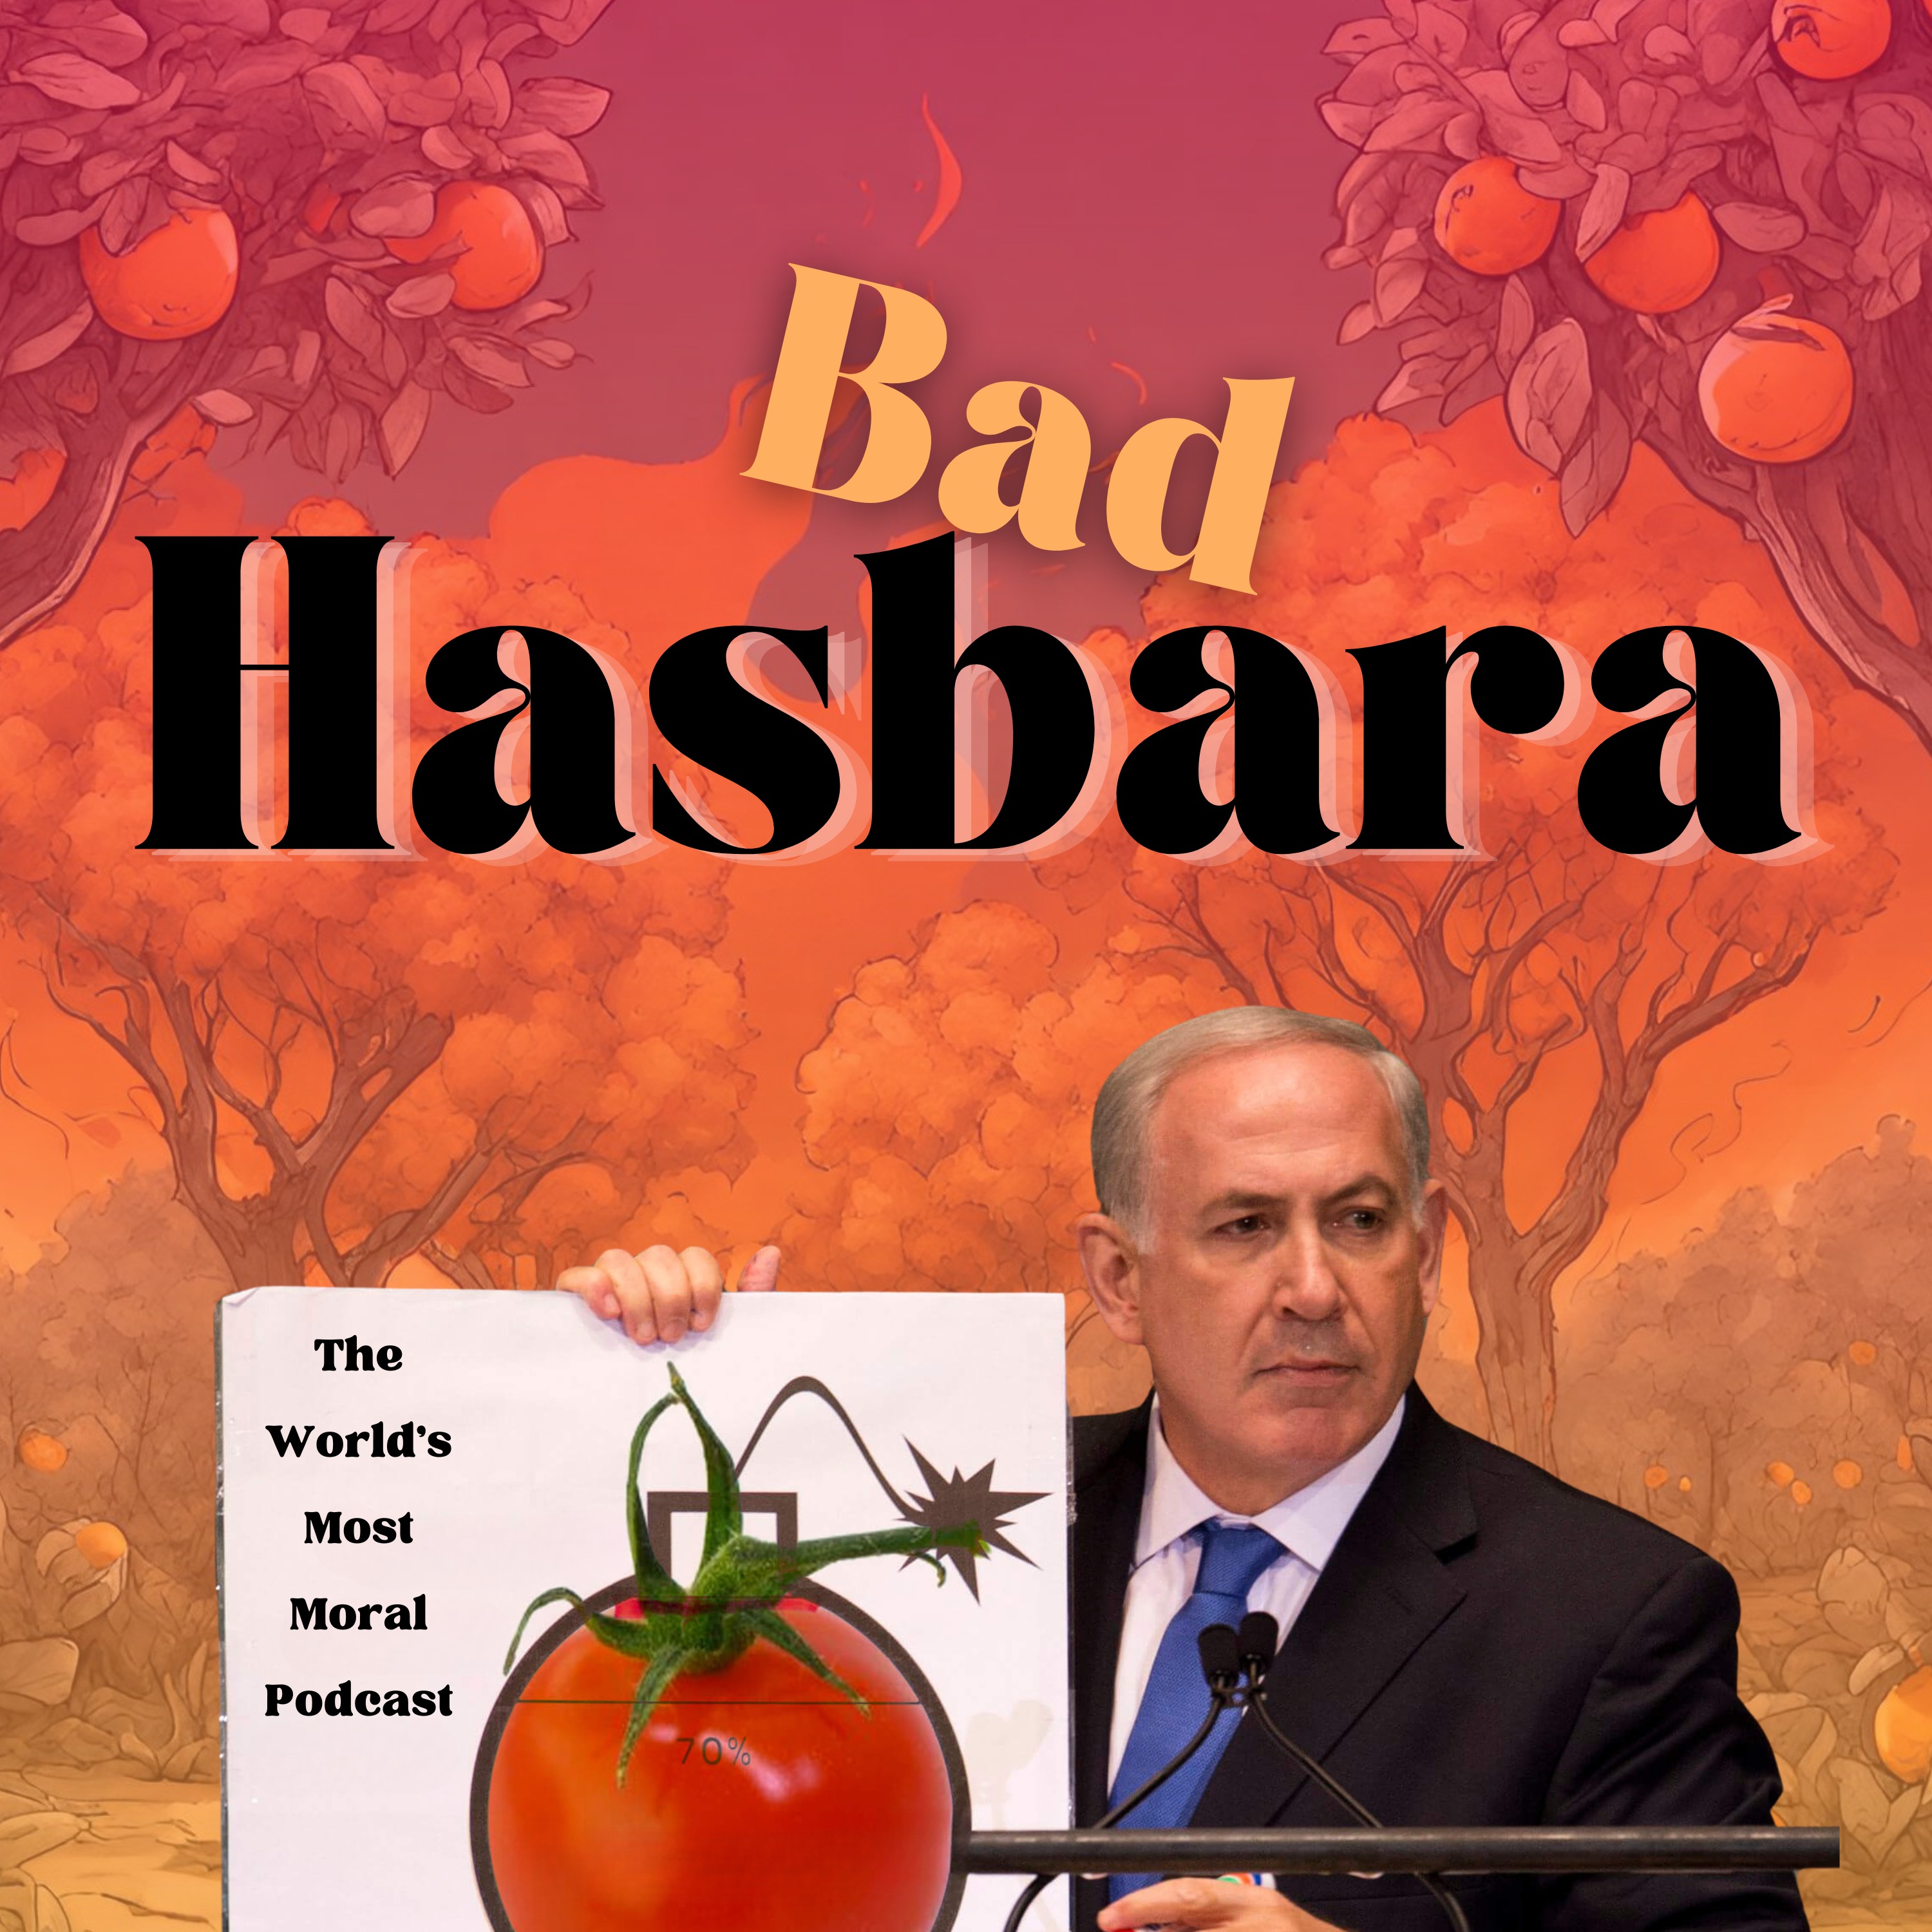 Bad Hasbara: Happy? New Year!